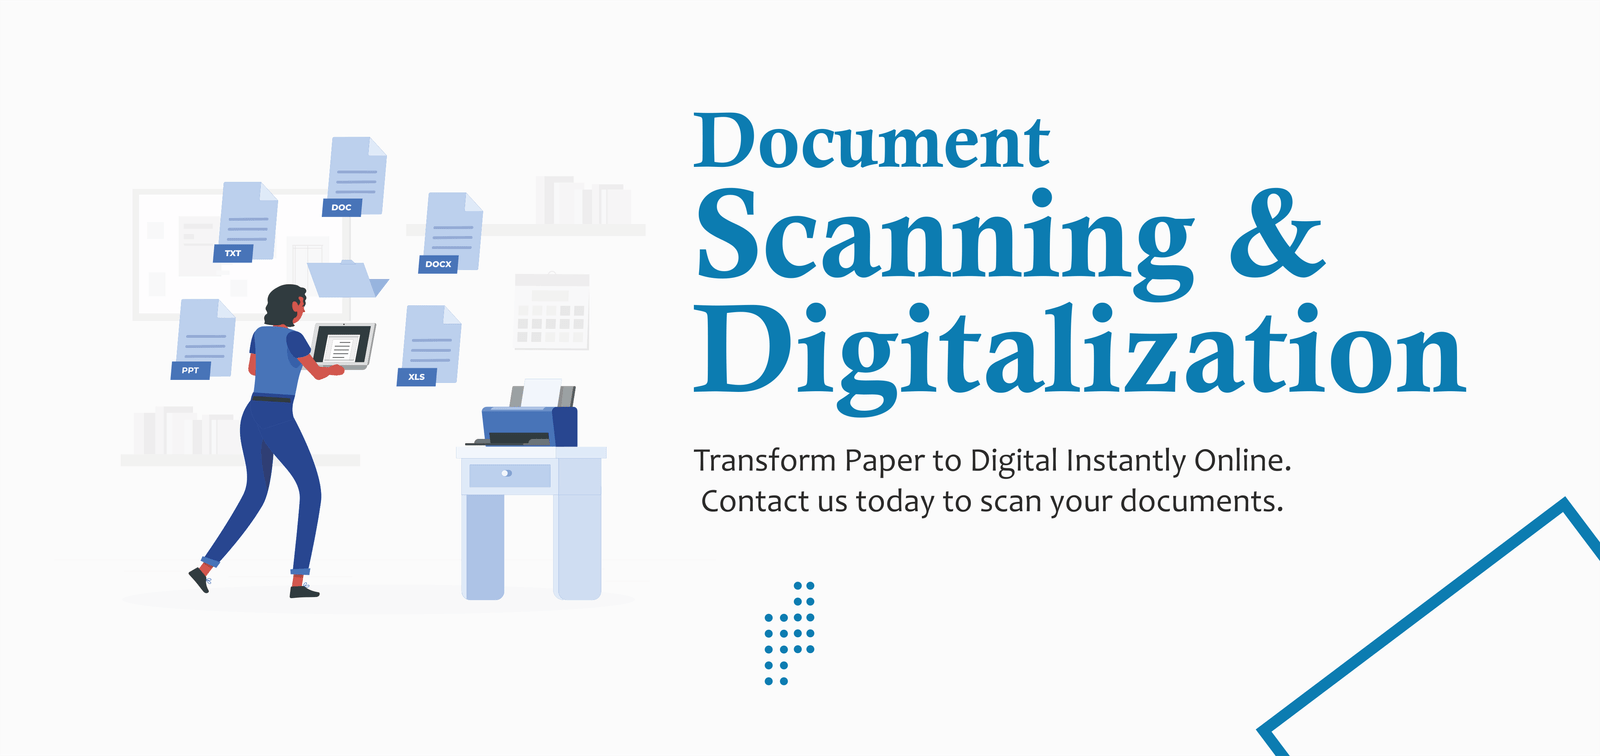 Scanning and Digitalization